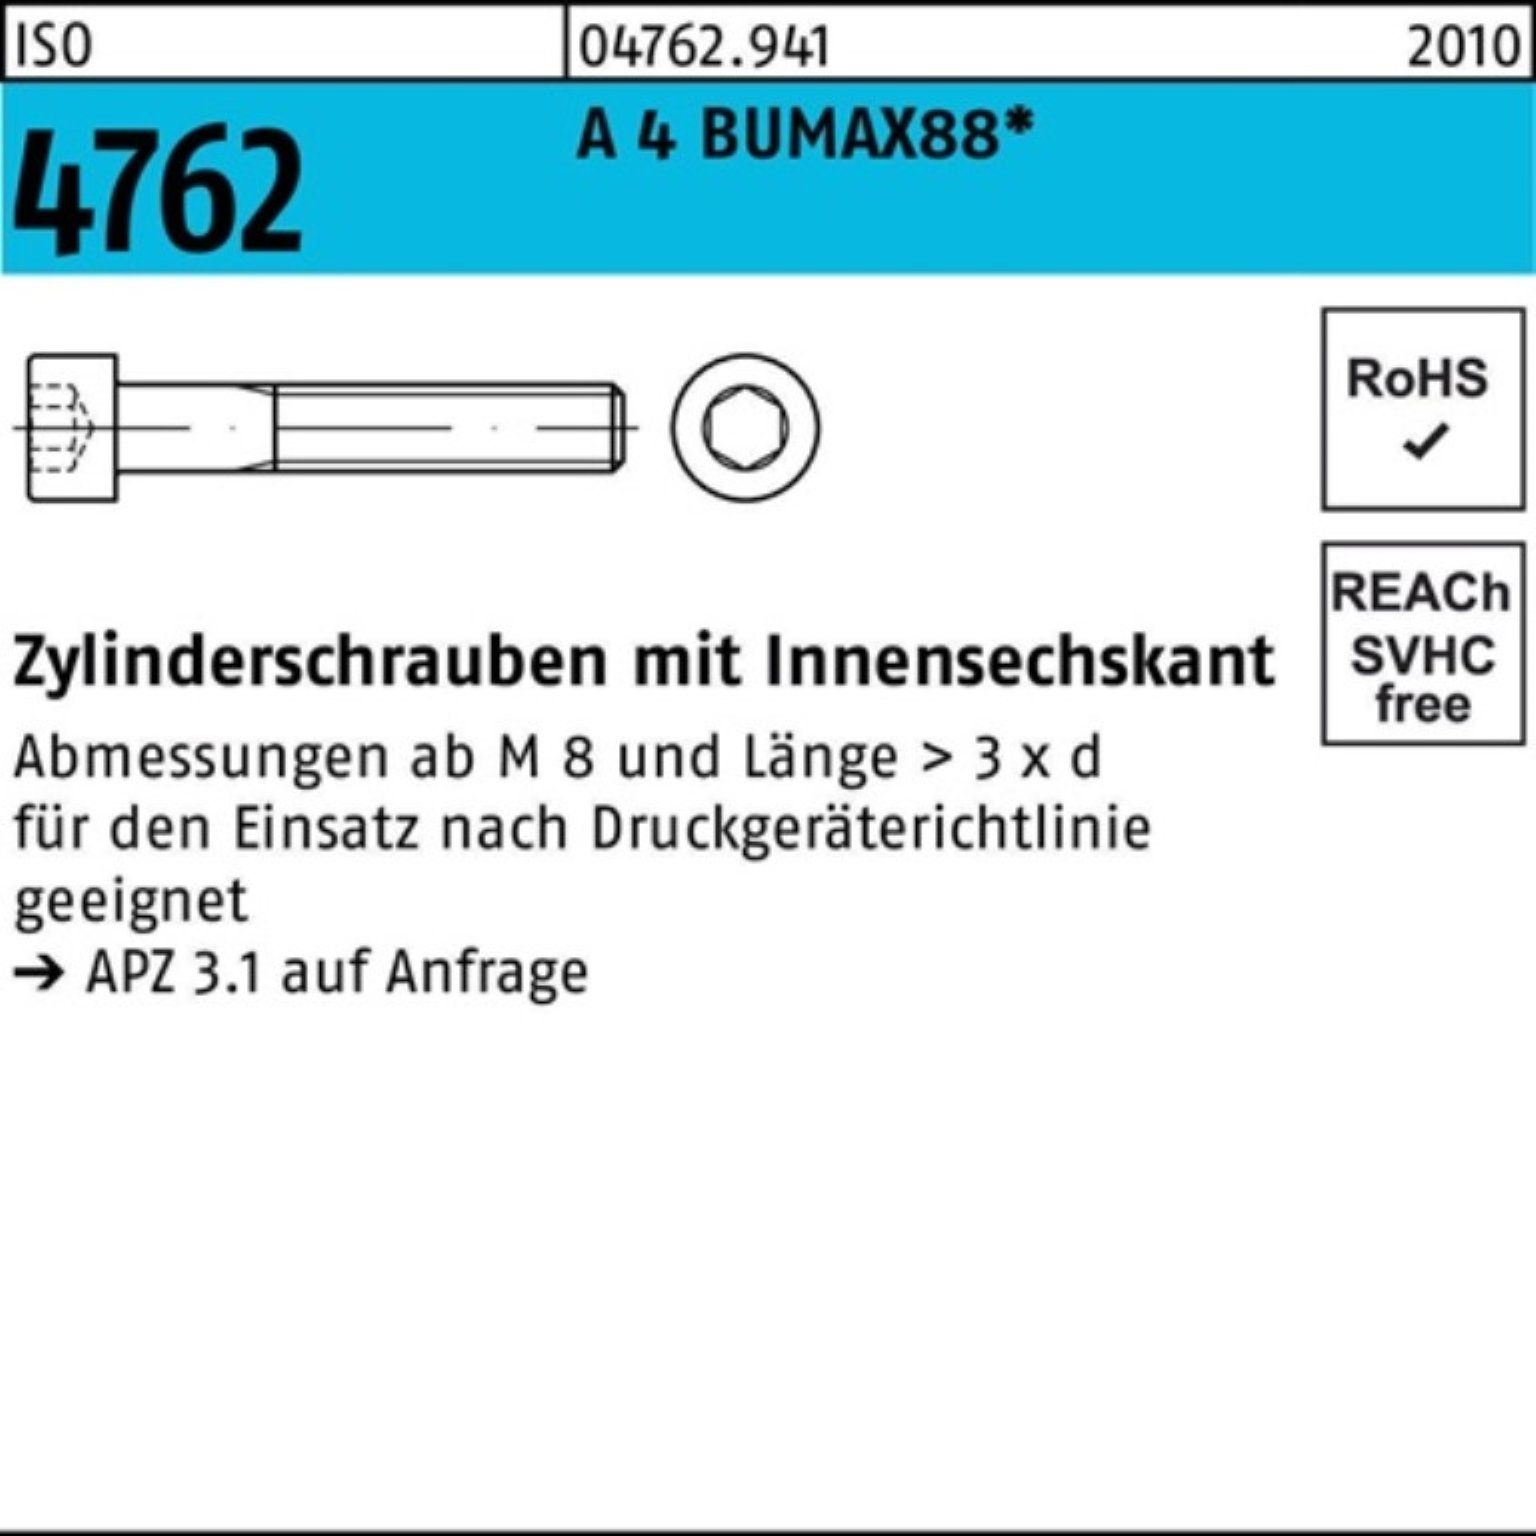 Bufab Zylinderschraube 100er Pack Zylinderschraube ISO 4762 Innen-6kt M8x 25 A 4 BUMAX88 50 S